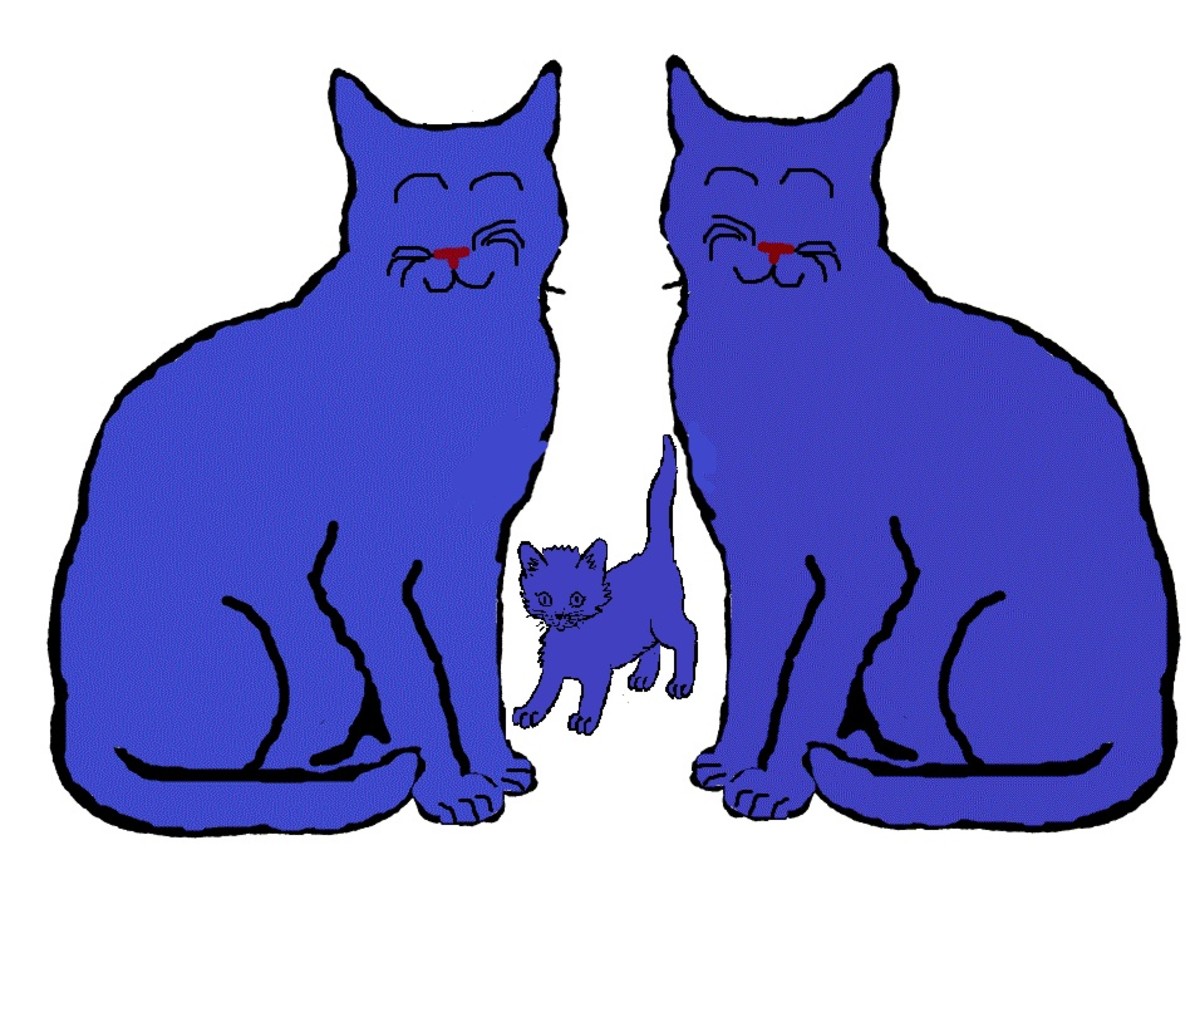 Indigo Cat X Indigo Cat = Indigo Kittens